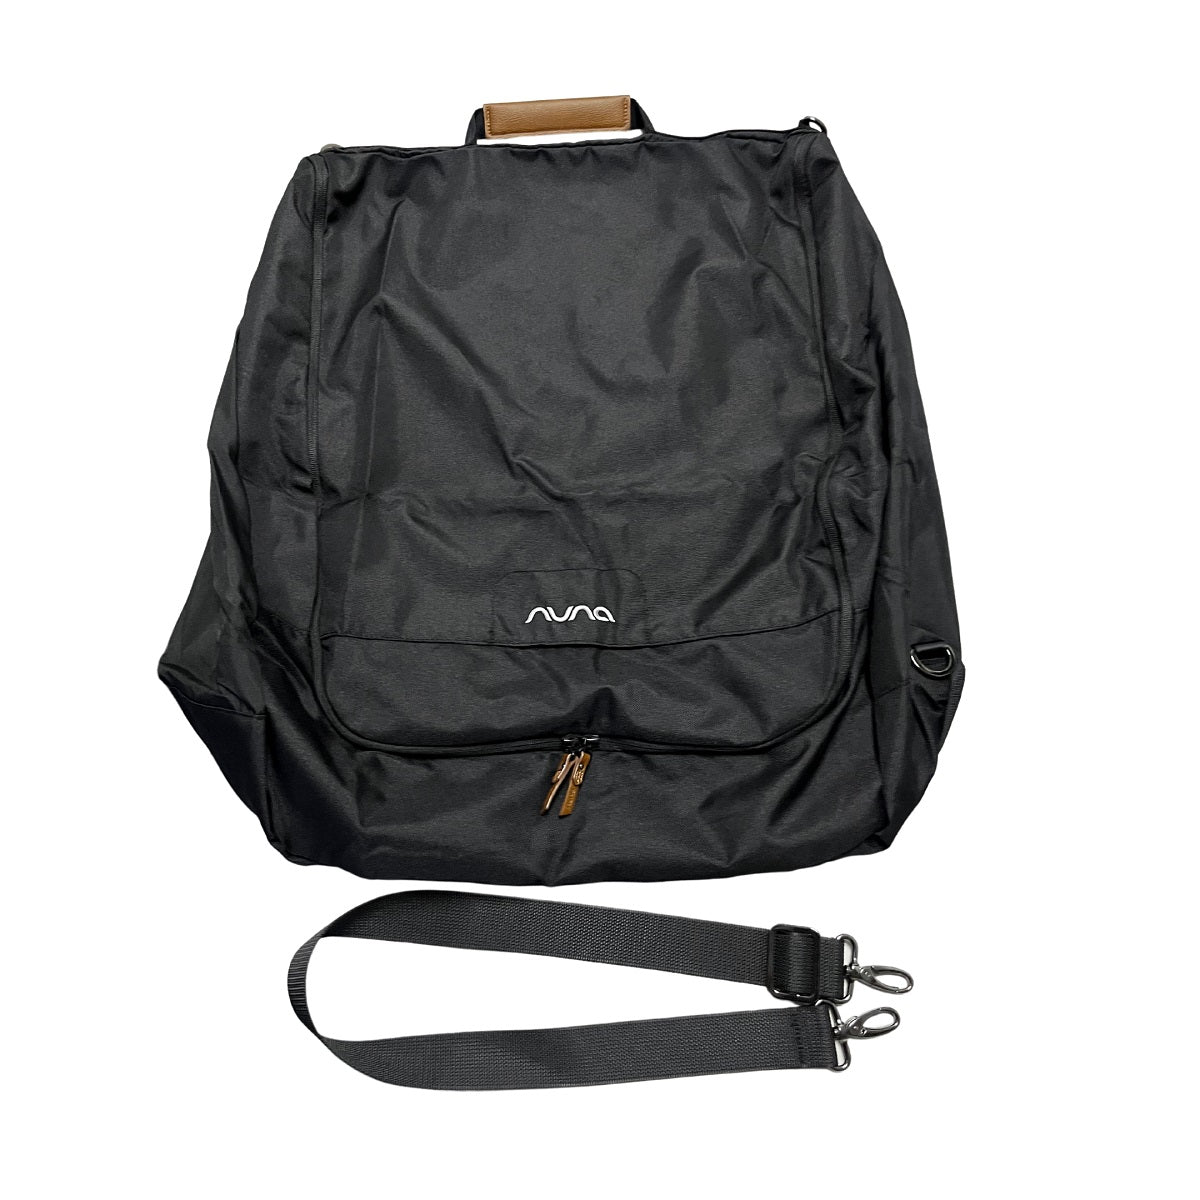 Nuna TRVL™ Basic Travel Bag